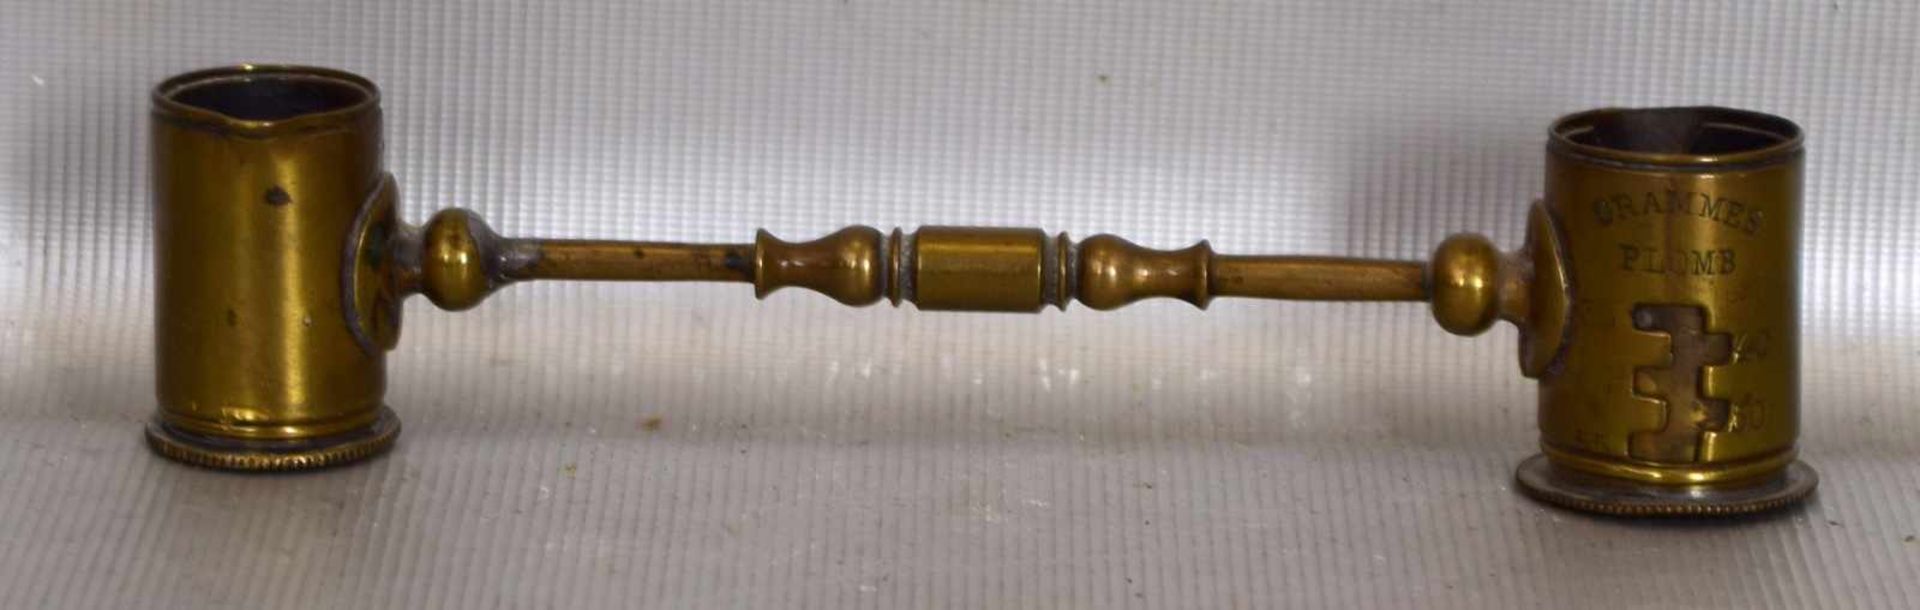 PulvermessbecherMessing, verzierter Griff mit zwei Bechern, L 13 cm, 19. Jh.